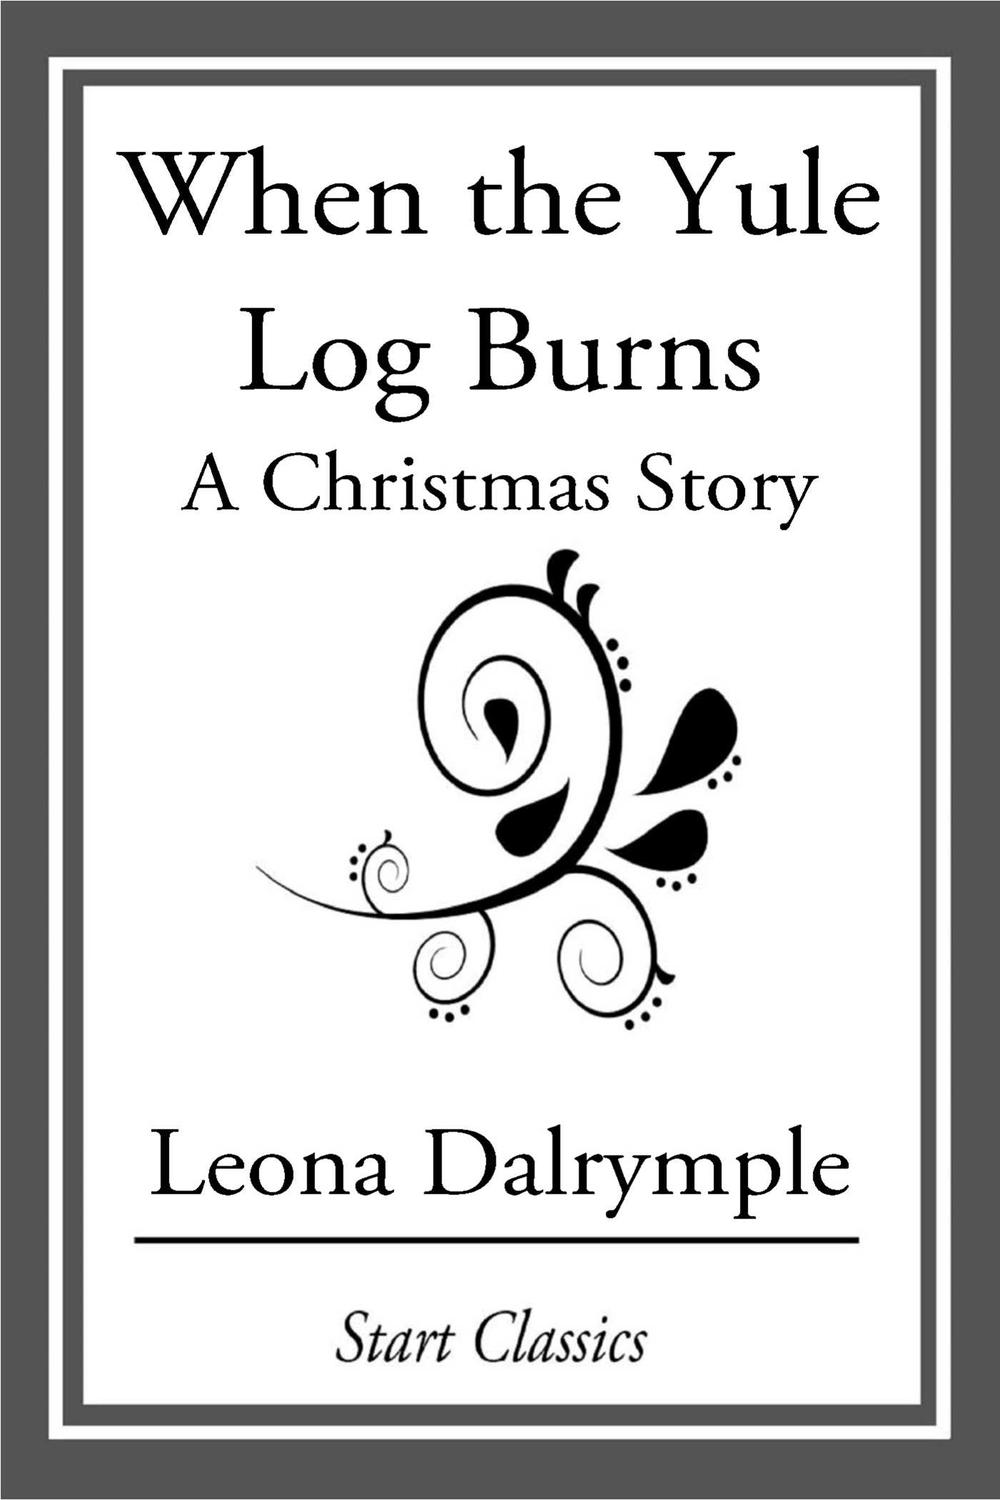 When the Yule Log Burns - Leona Dalrymple